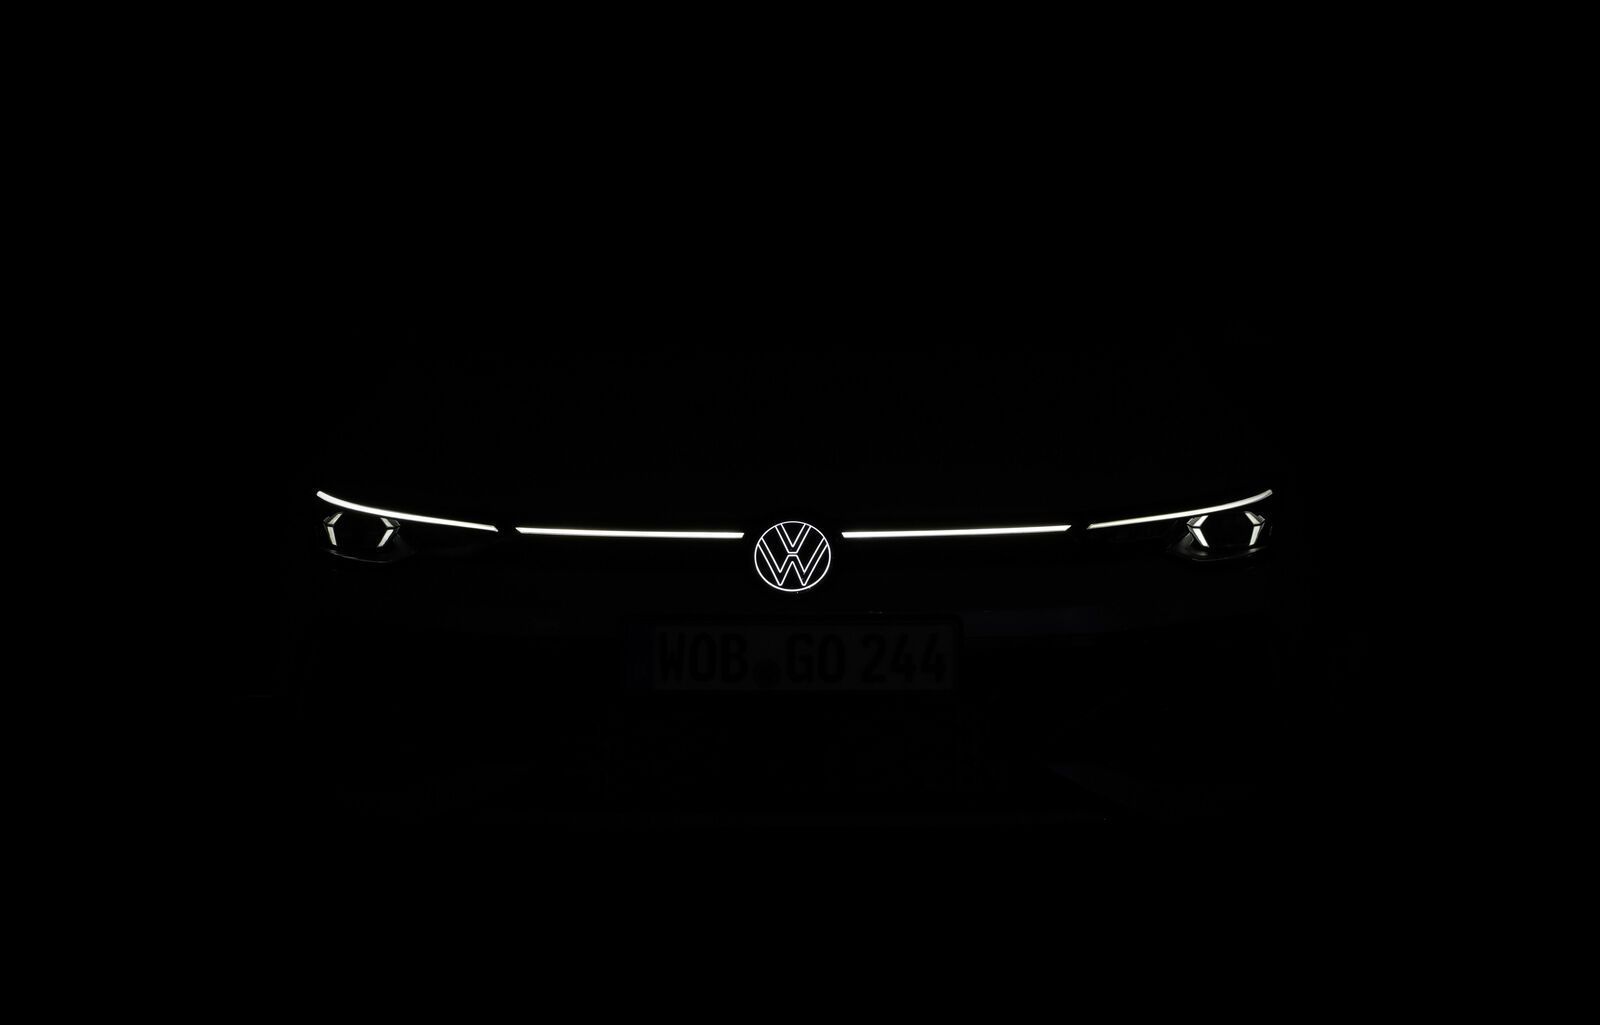 The new Volkswagen Golf Variant